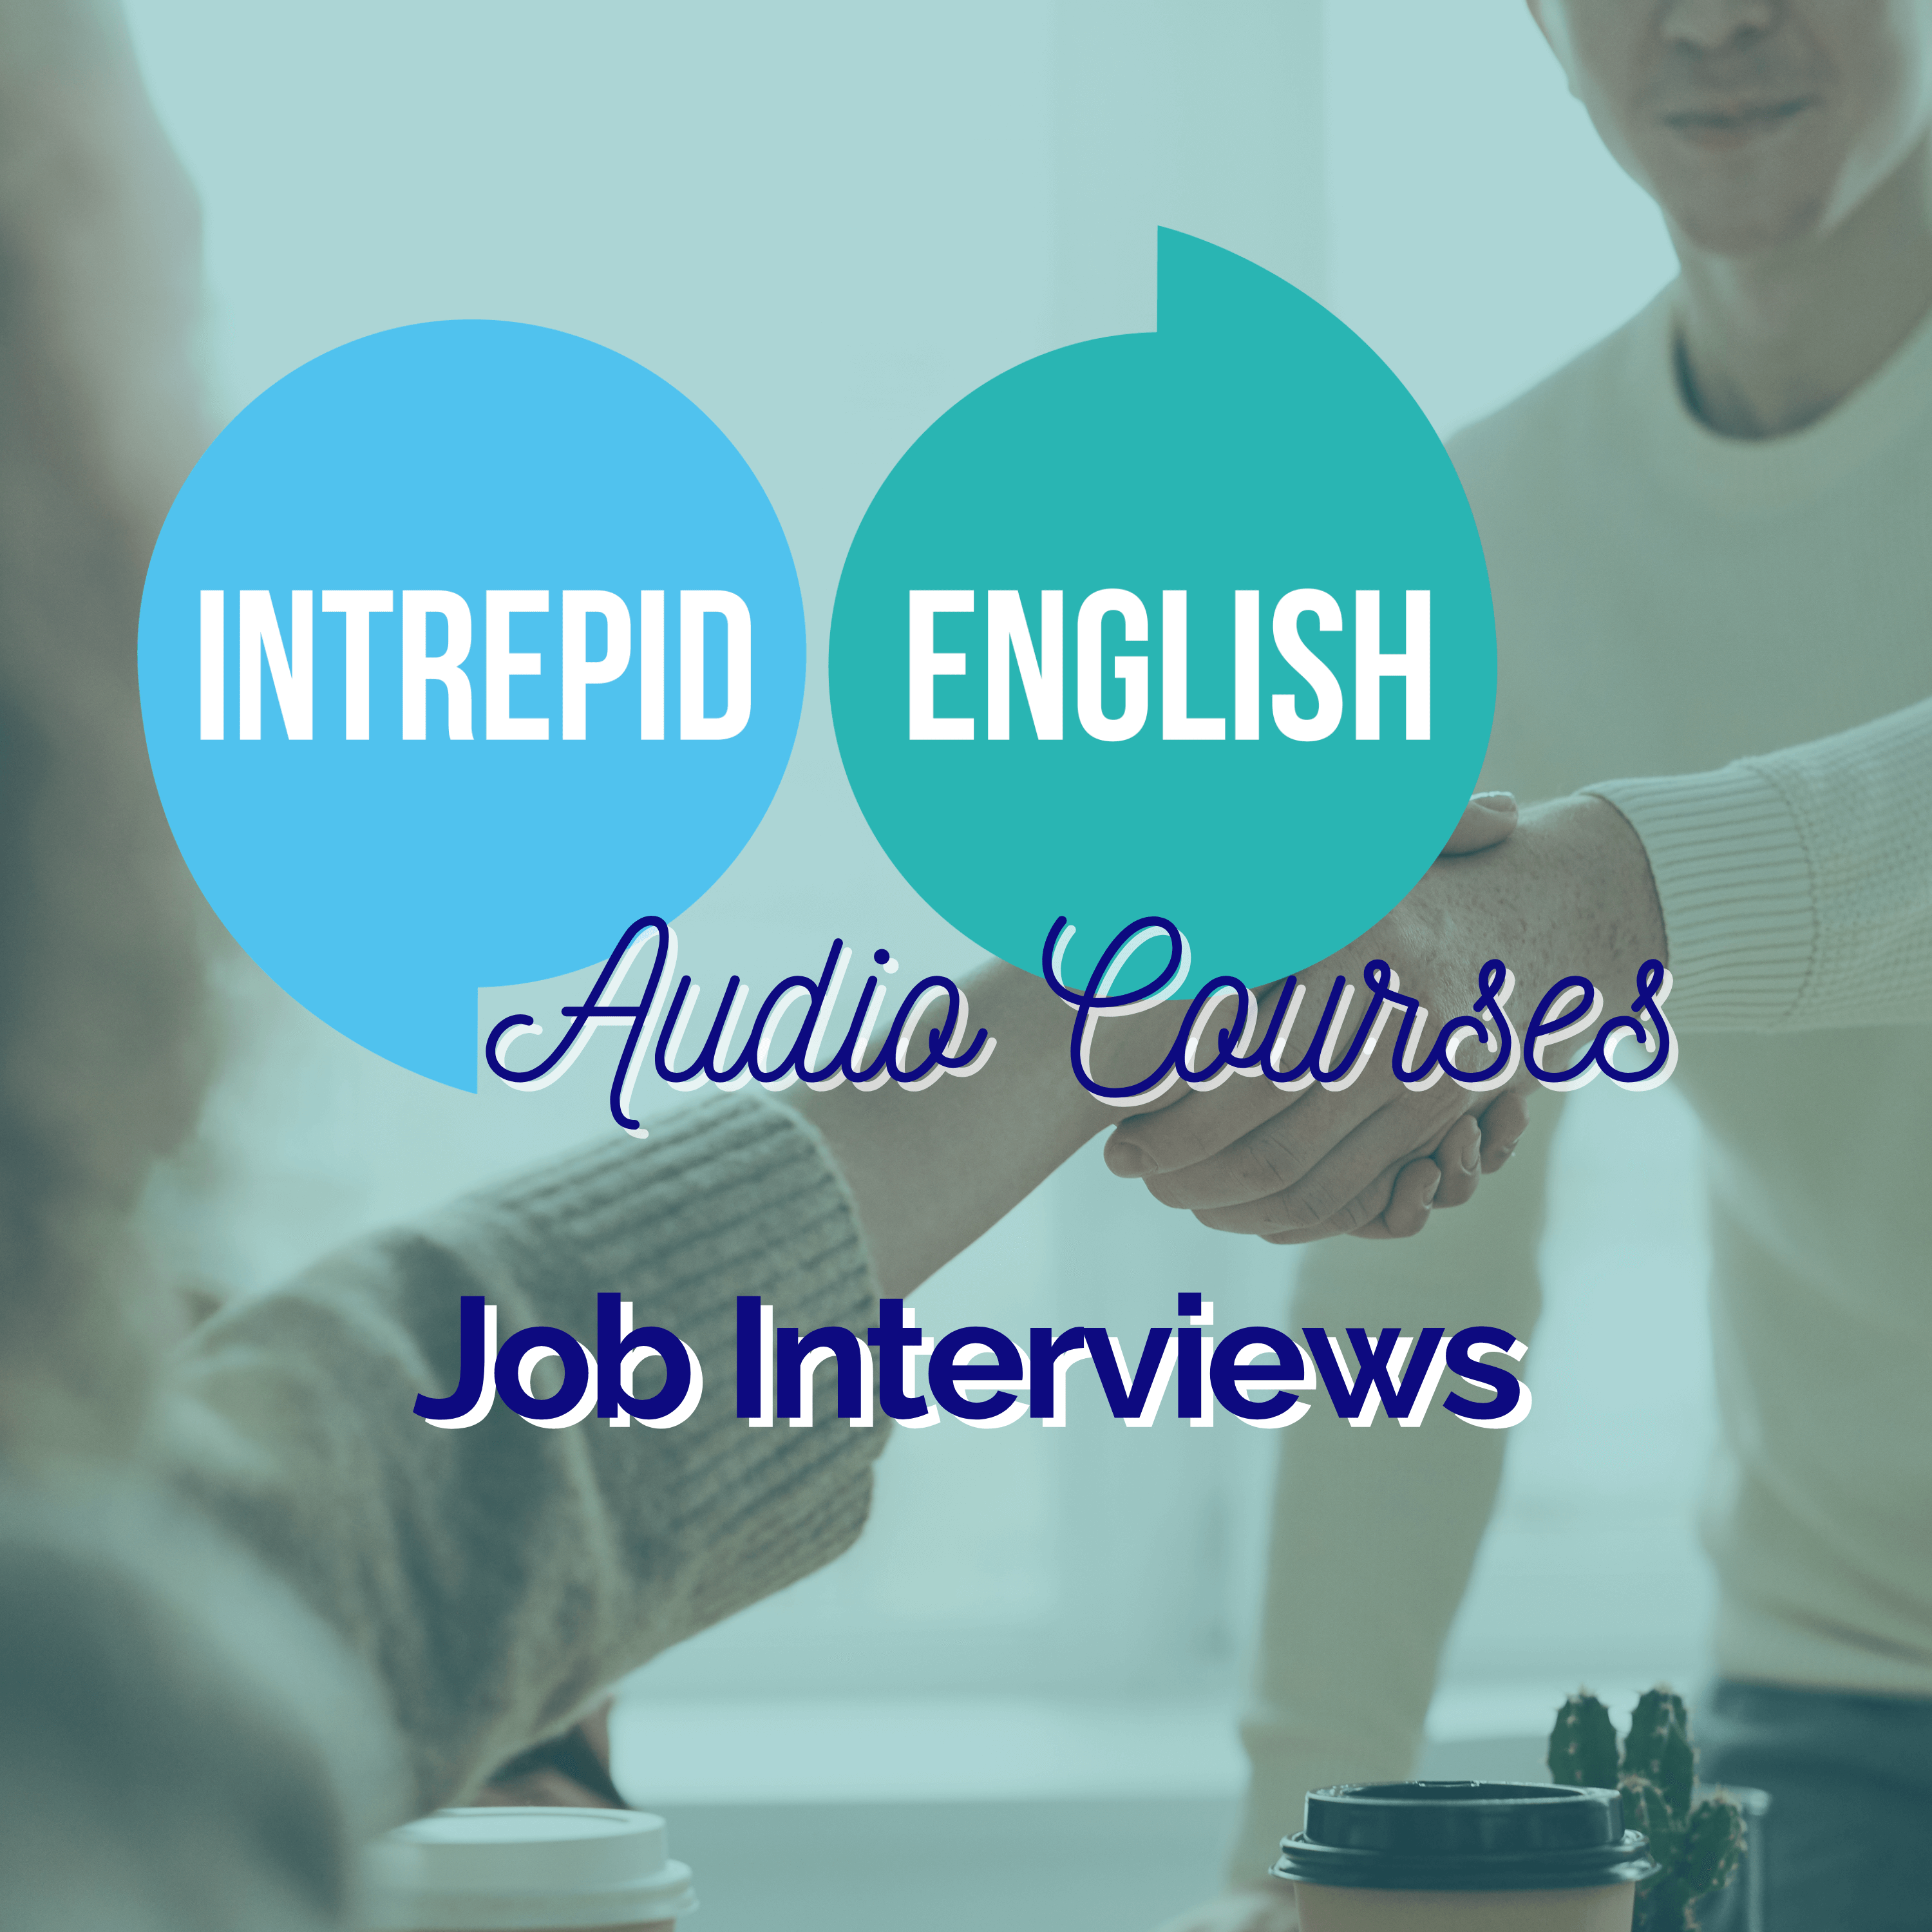 Audio Courses job interviews